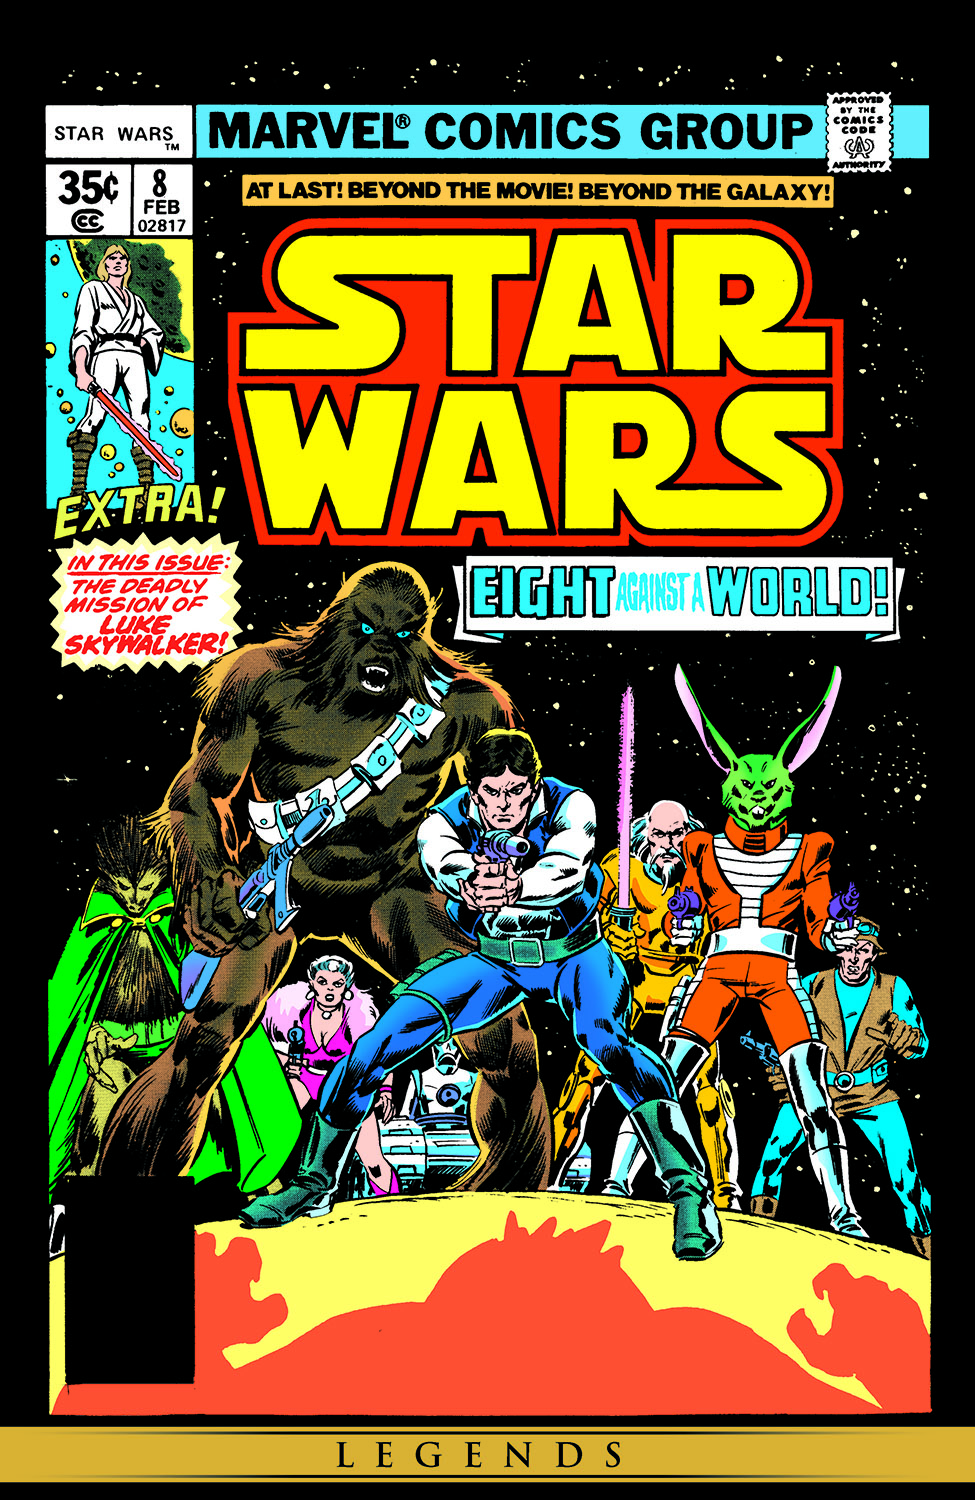 Star wars 1977 comic book